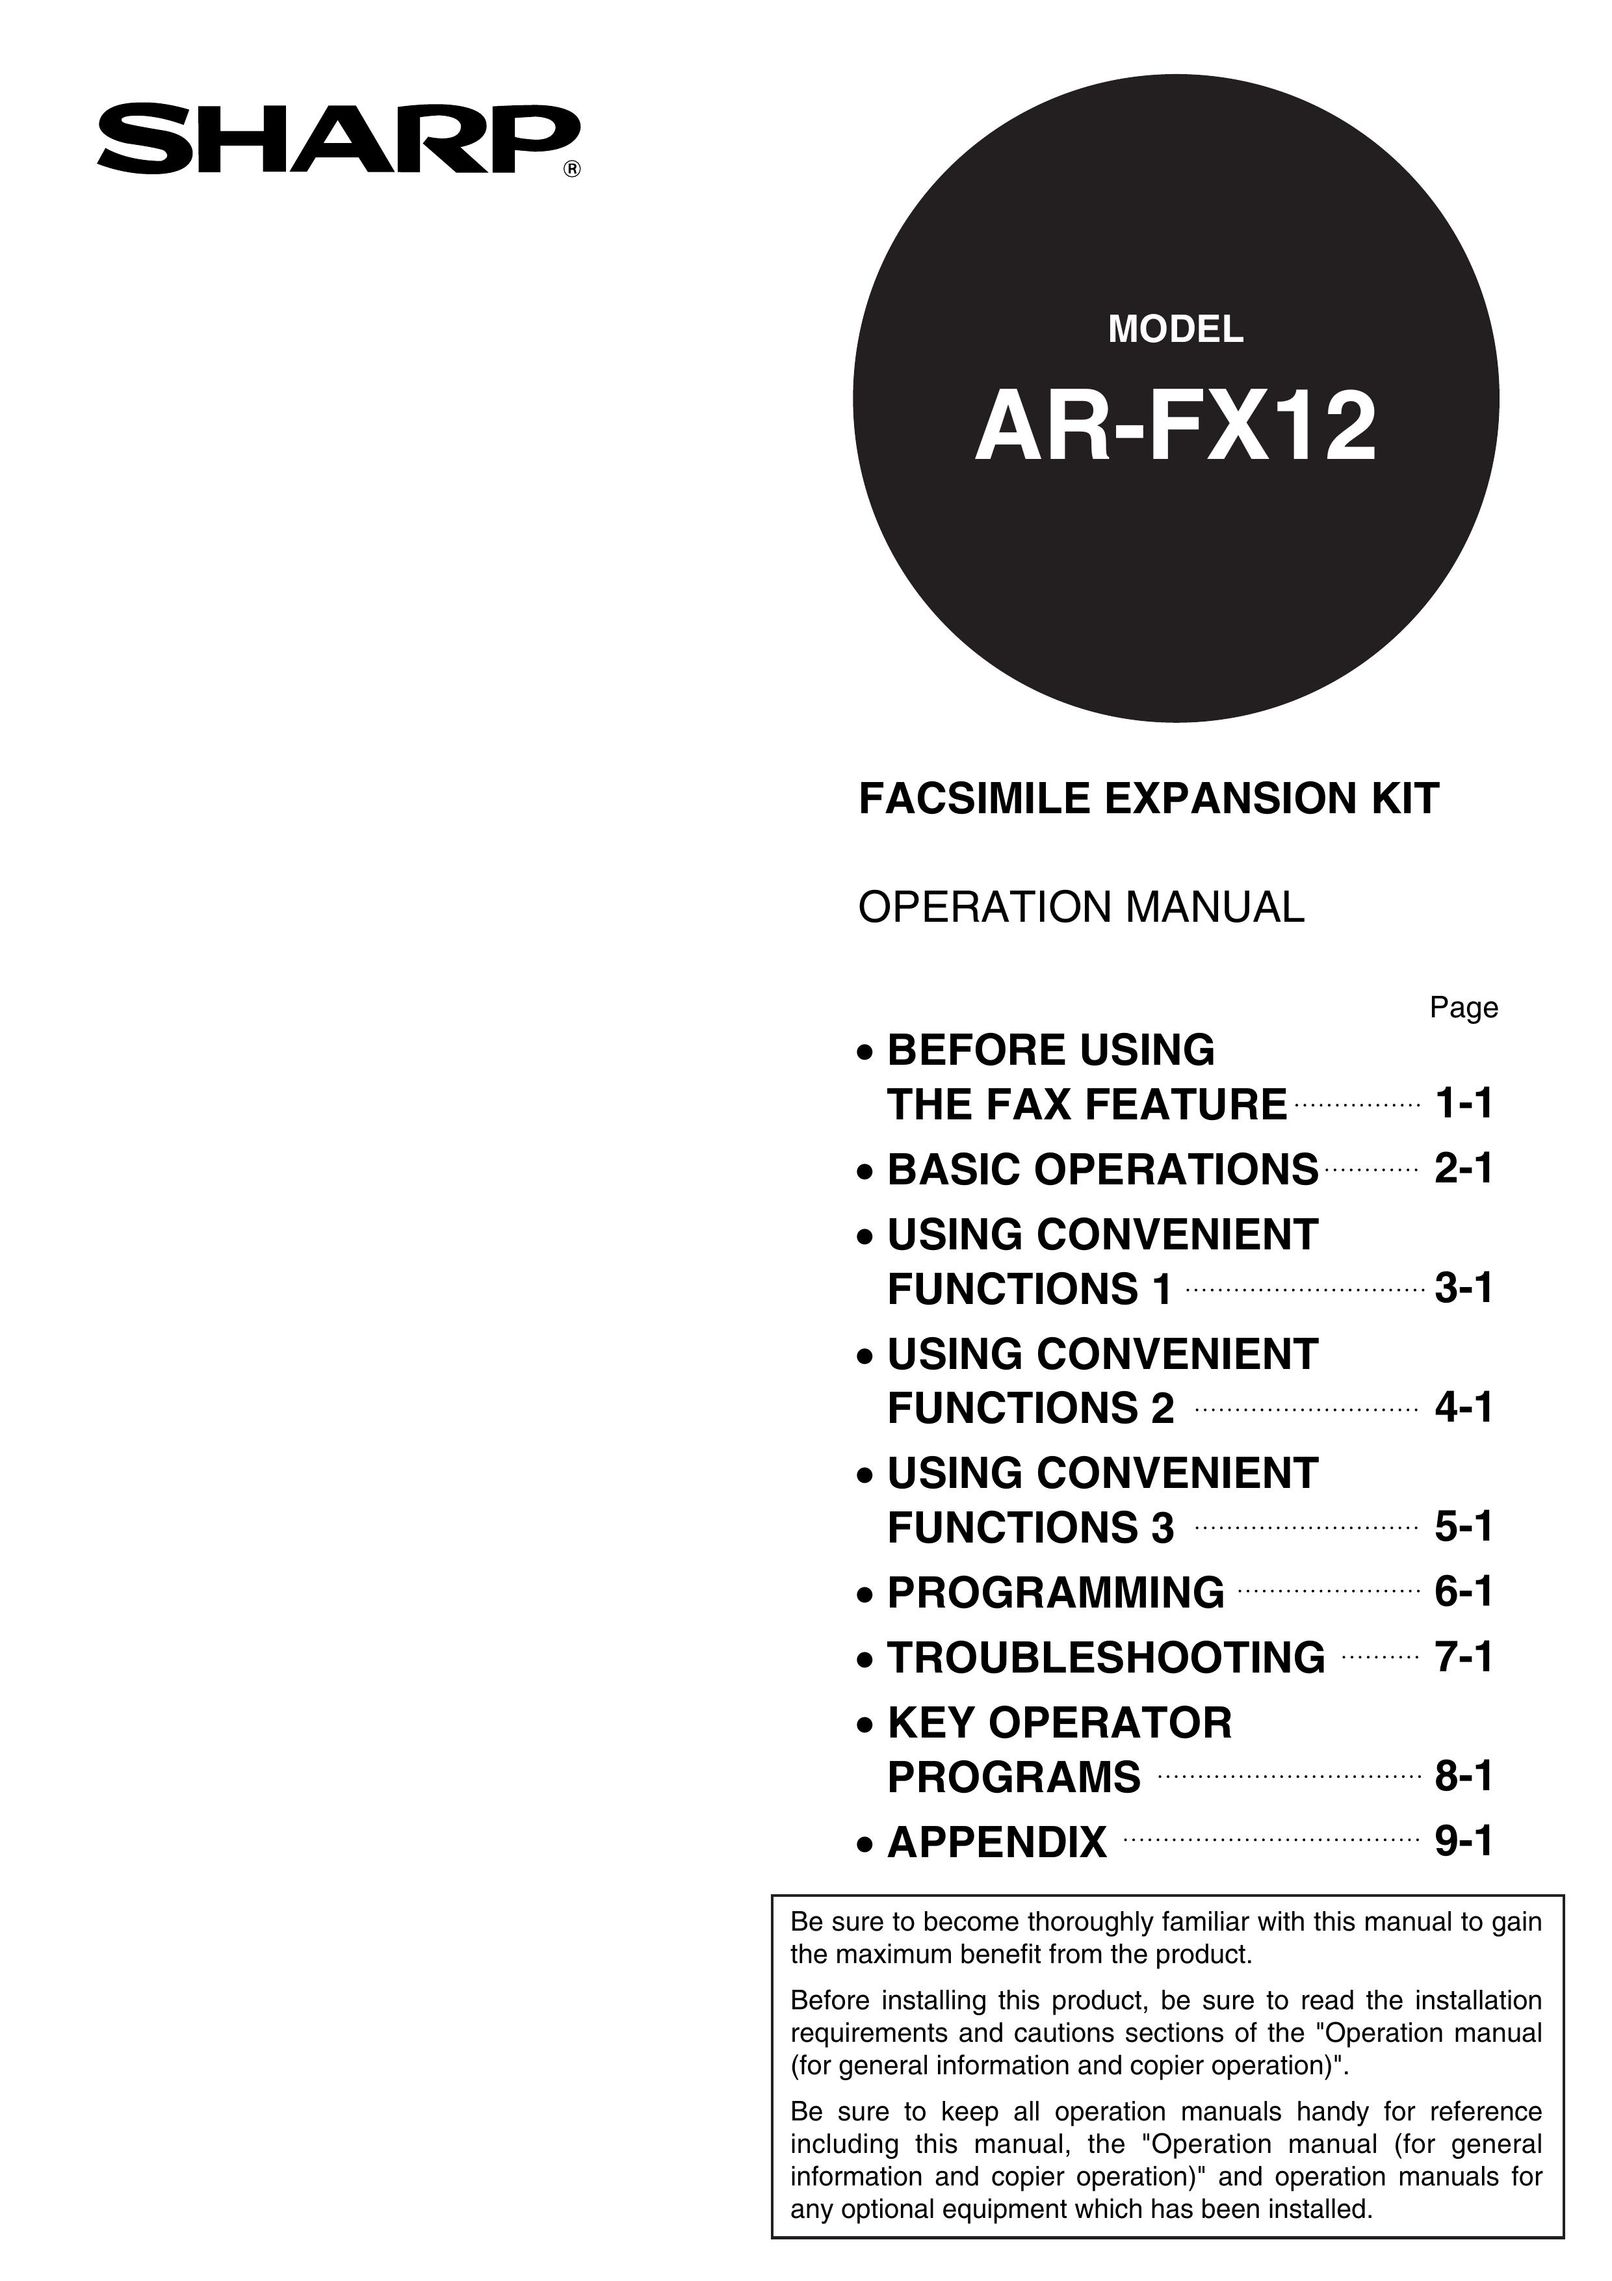 Sharp AR-FX12 Fax Machine User Manual